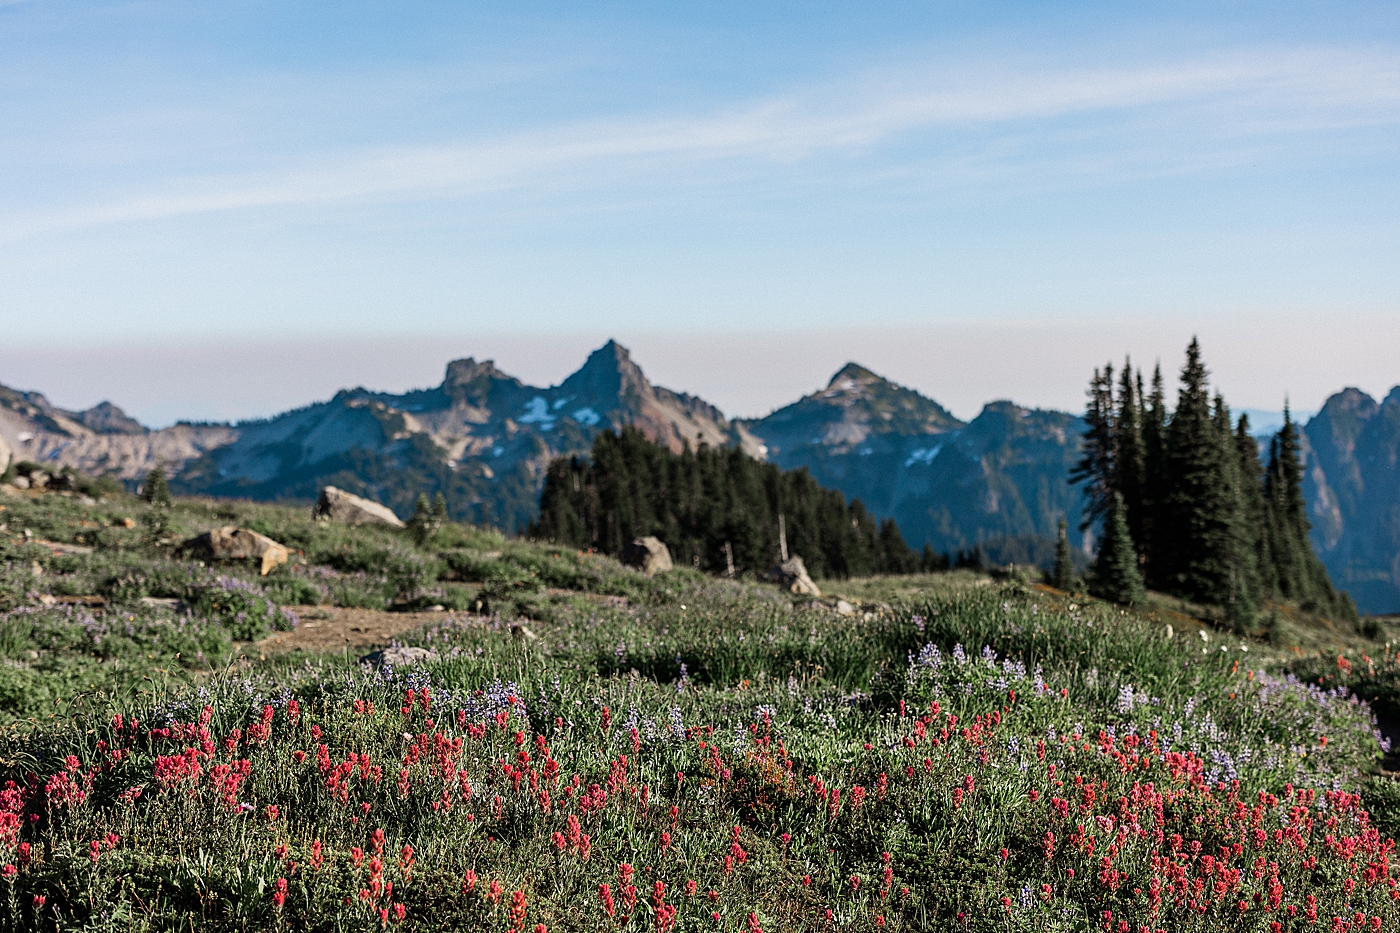 Wildflowers at Mt Rainier. Photo by Megan Montalvo Photography.